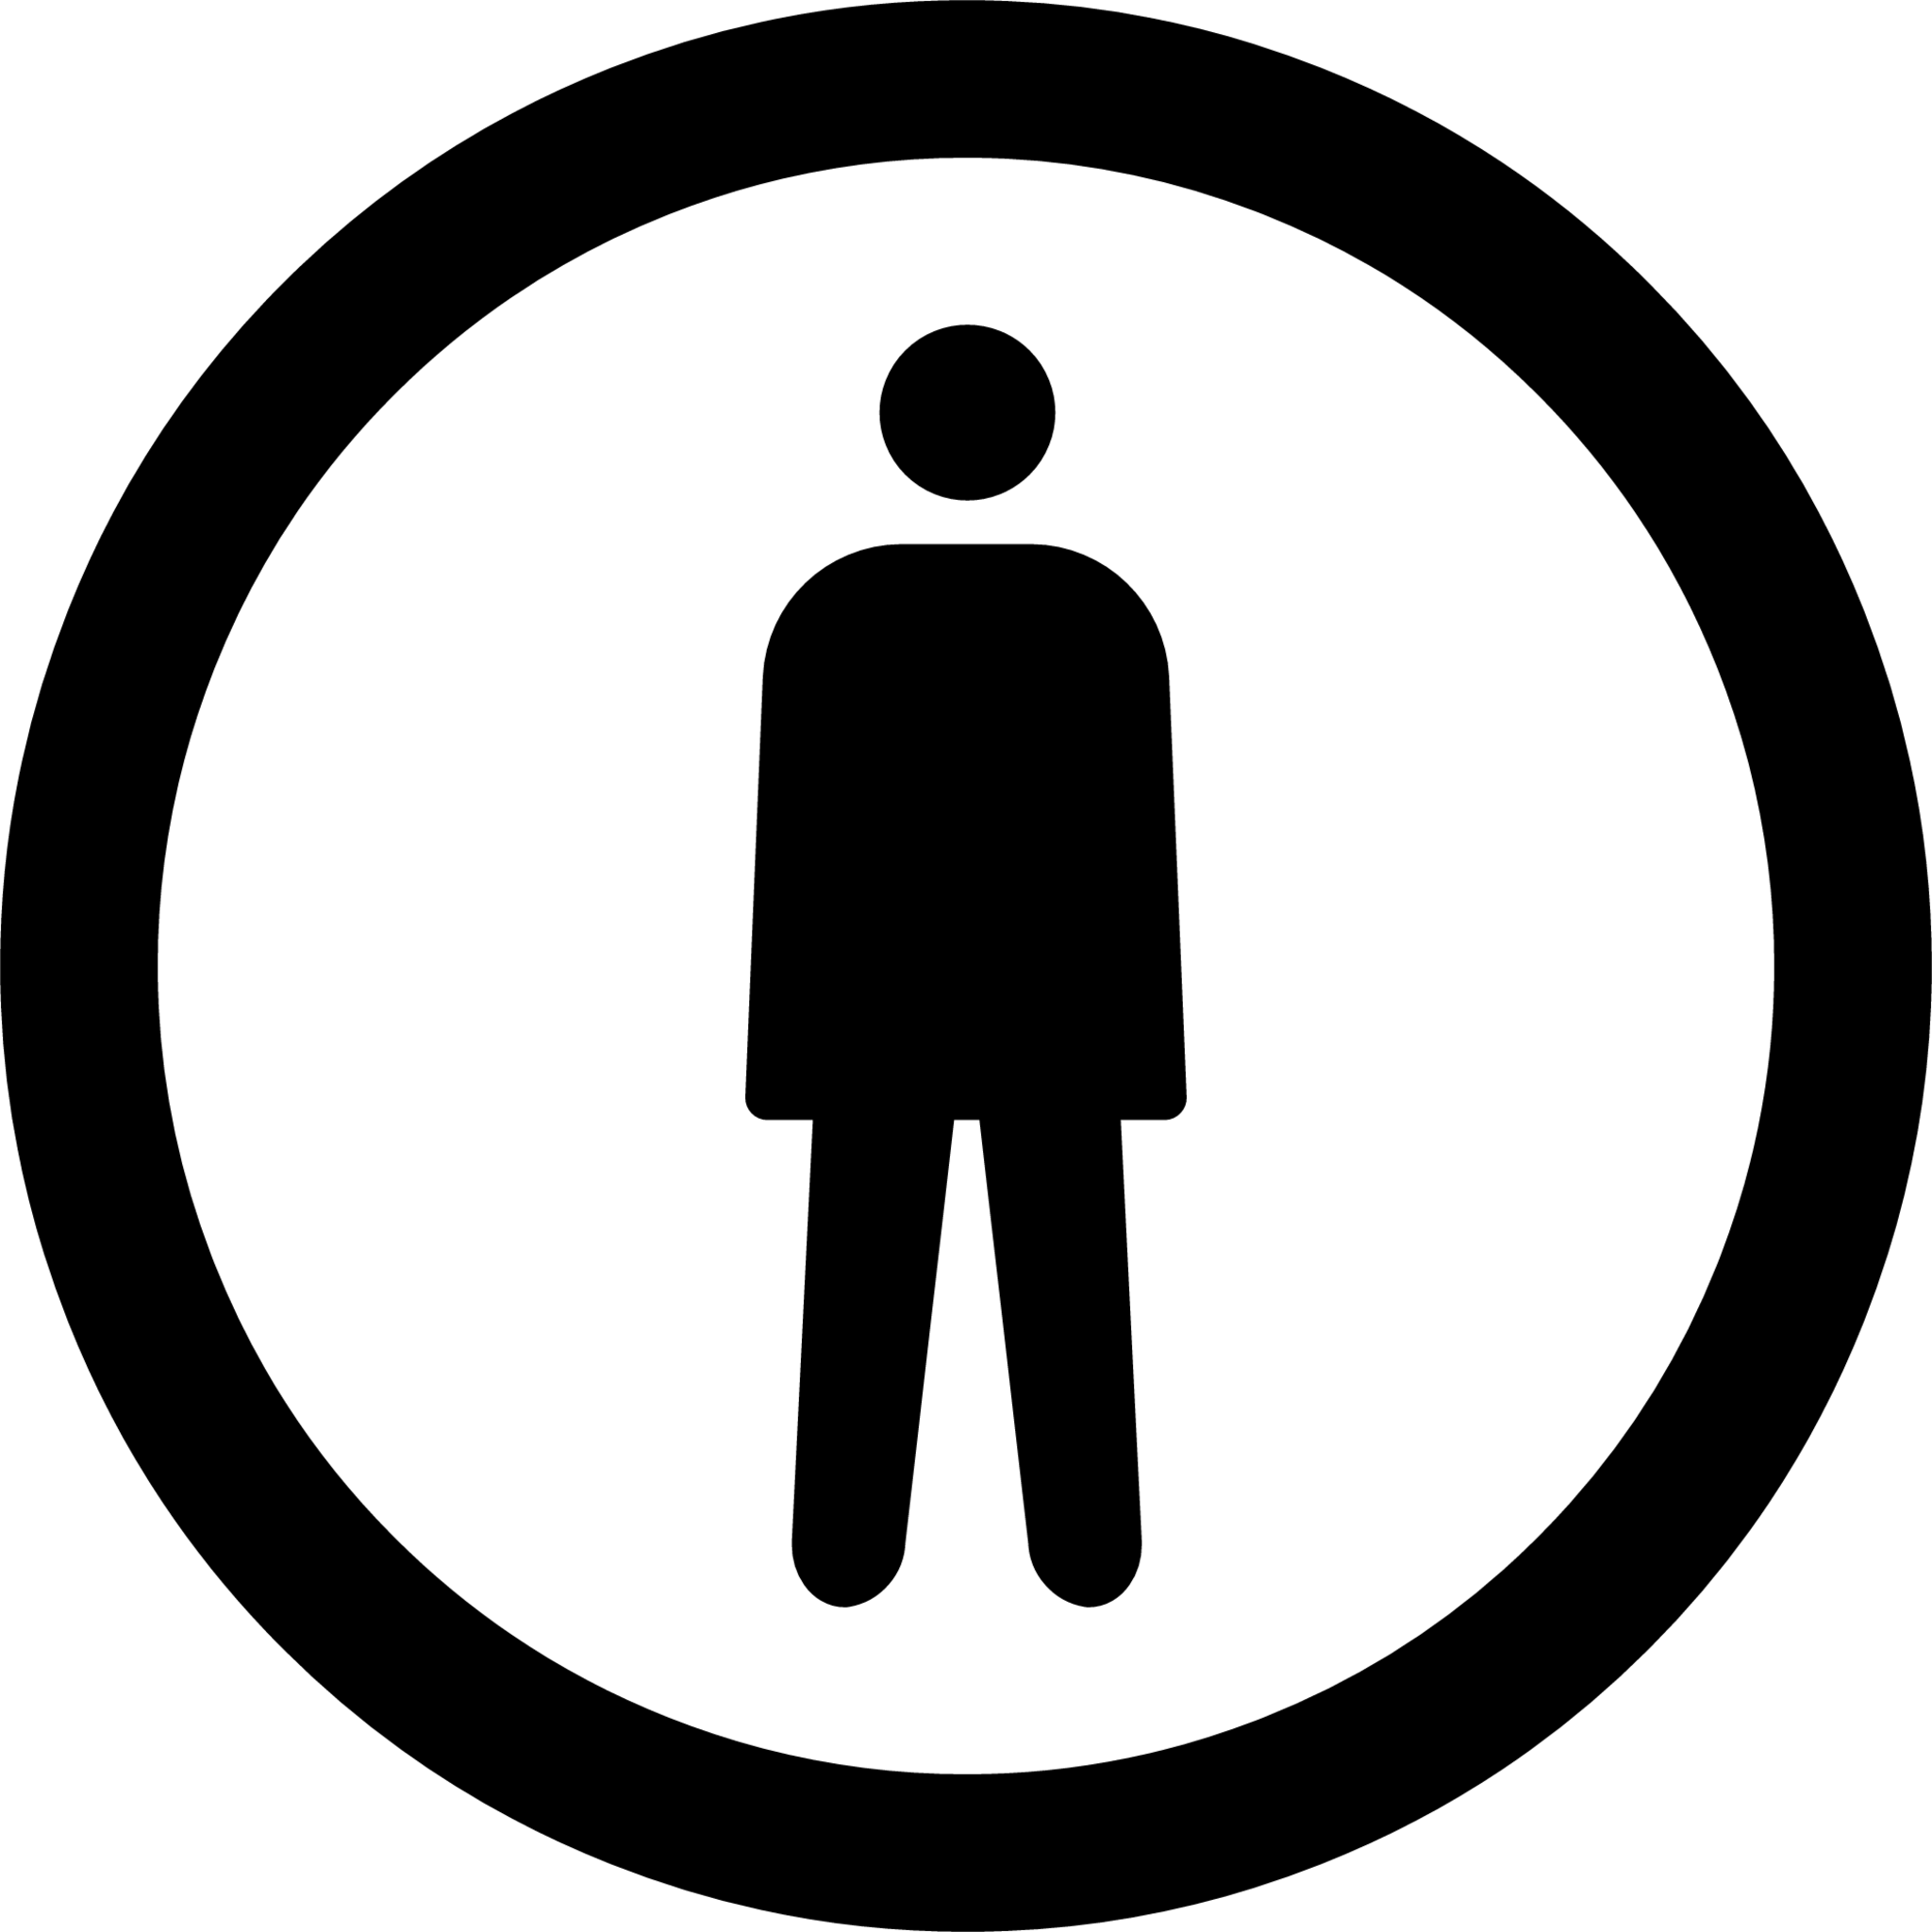 circled human figure emoji